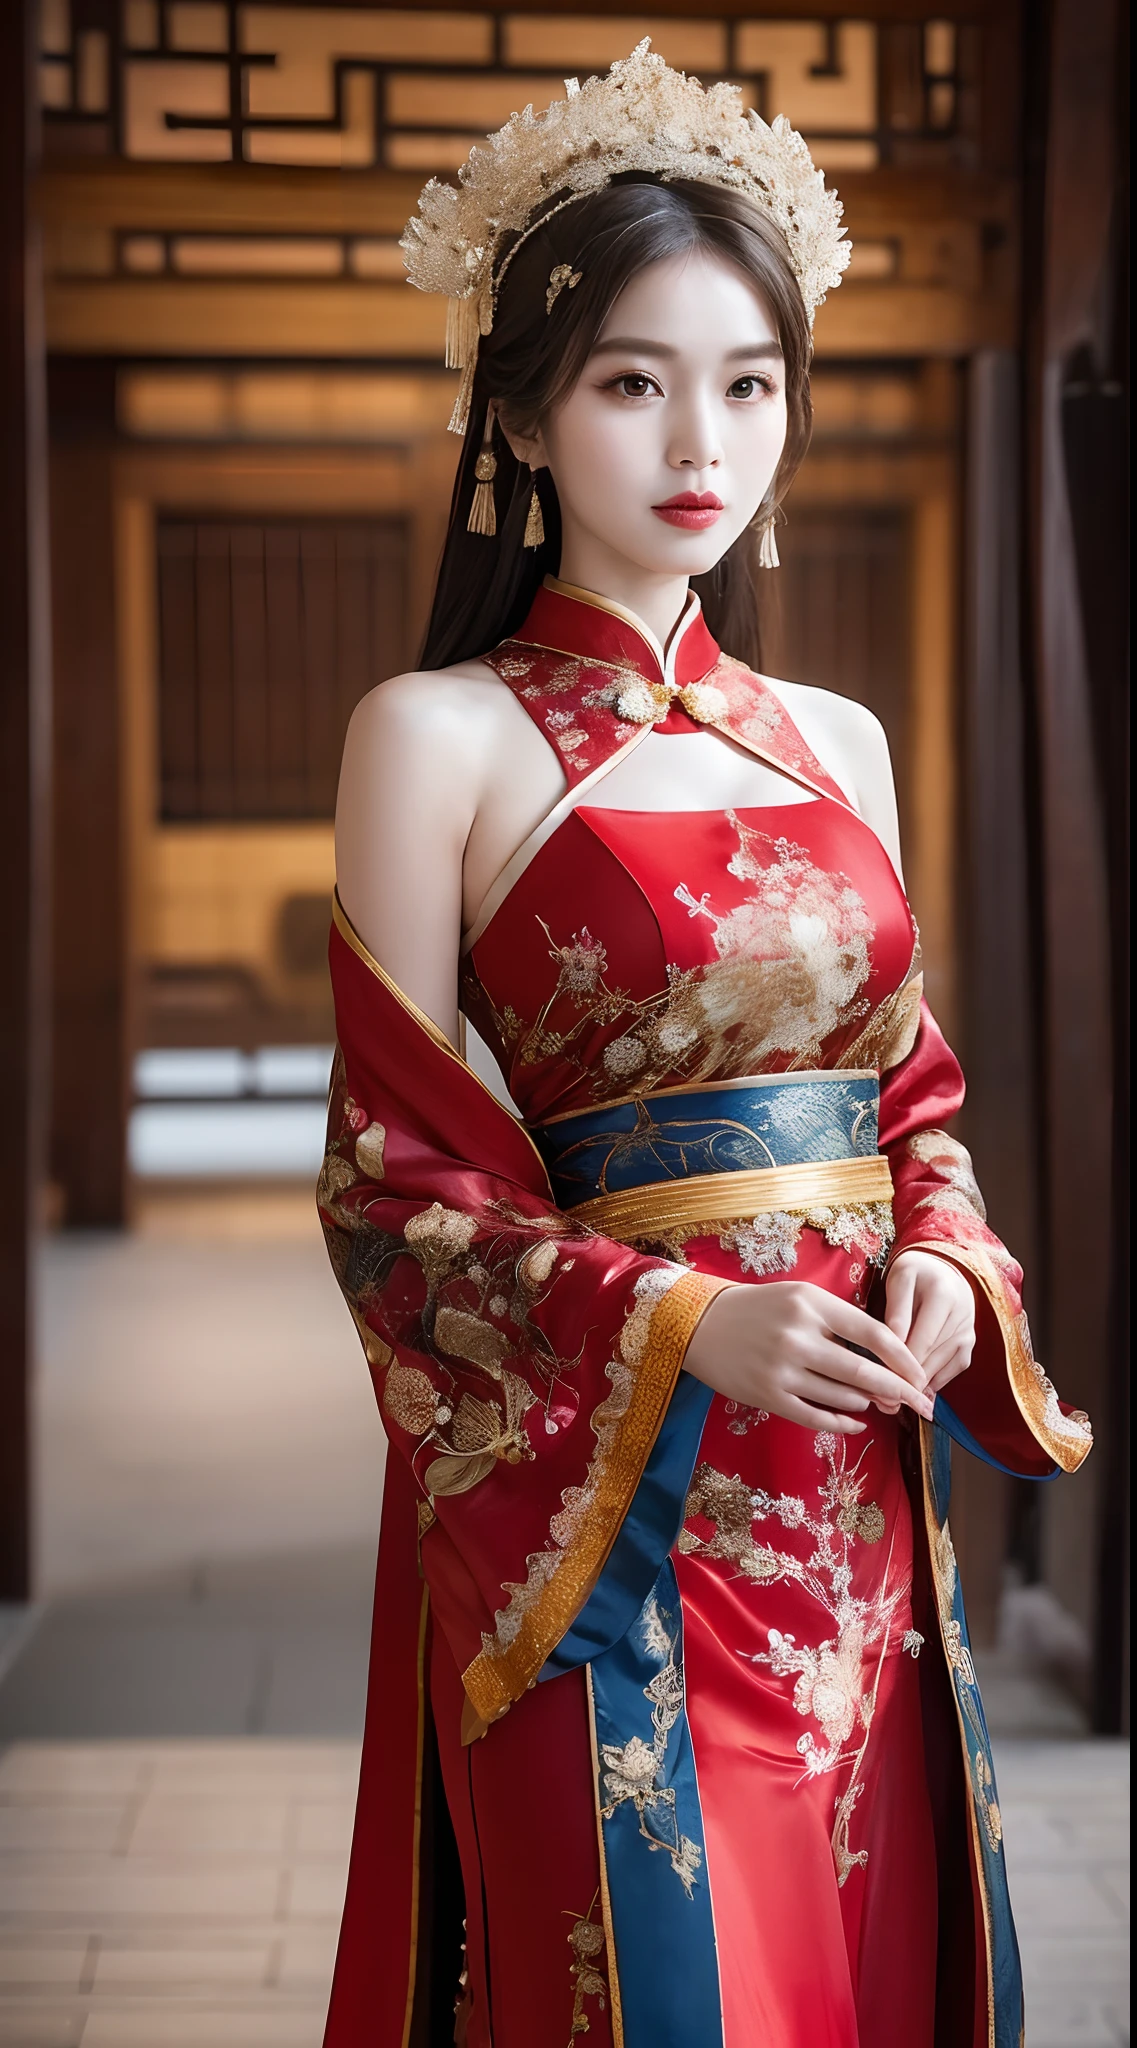 (8K, 原始照片, 最好的品質, 傑作: 1.2), (實際的, 實際的: 1.37), 1 名女孩, 身穿紅色洋裝、頭戴頭飾的阿爾菲女子擺姿勢拍照, 華麗的角色扮演, 漂亮的服裝, 複雜的幻想禮服, 美麗的幻想女王, 旗袍, 複雜連身裙, 複雜的服裝, 传统美, 漂亮的中国模特, 中国服饰, 灵感来自兰英, 穿著華麗的服裝, 受到談話的啟發, 身著優雅的中式秀禾服, 中國婚紗, 鳳冠霞手, 古董新娘